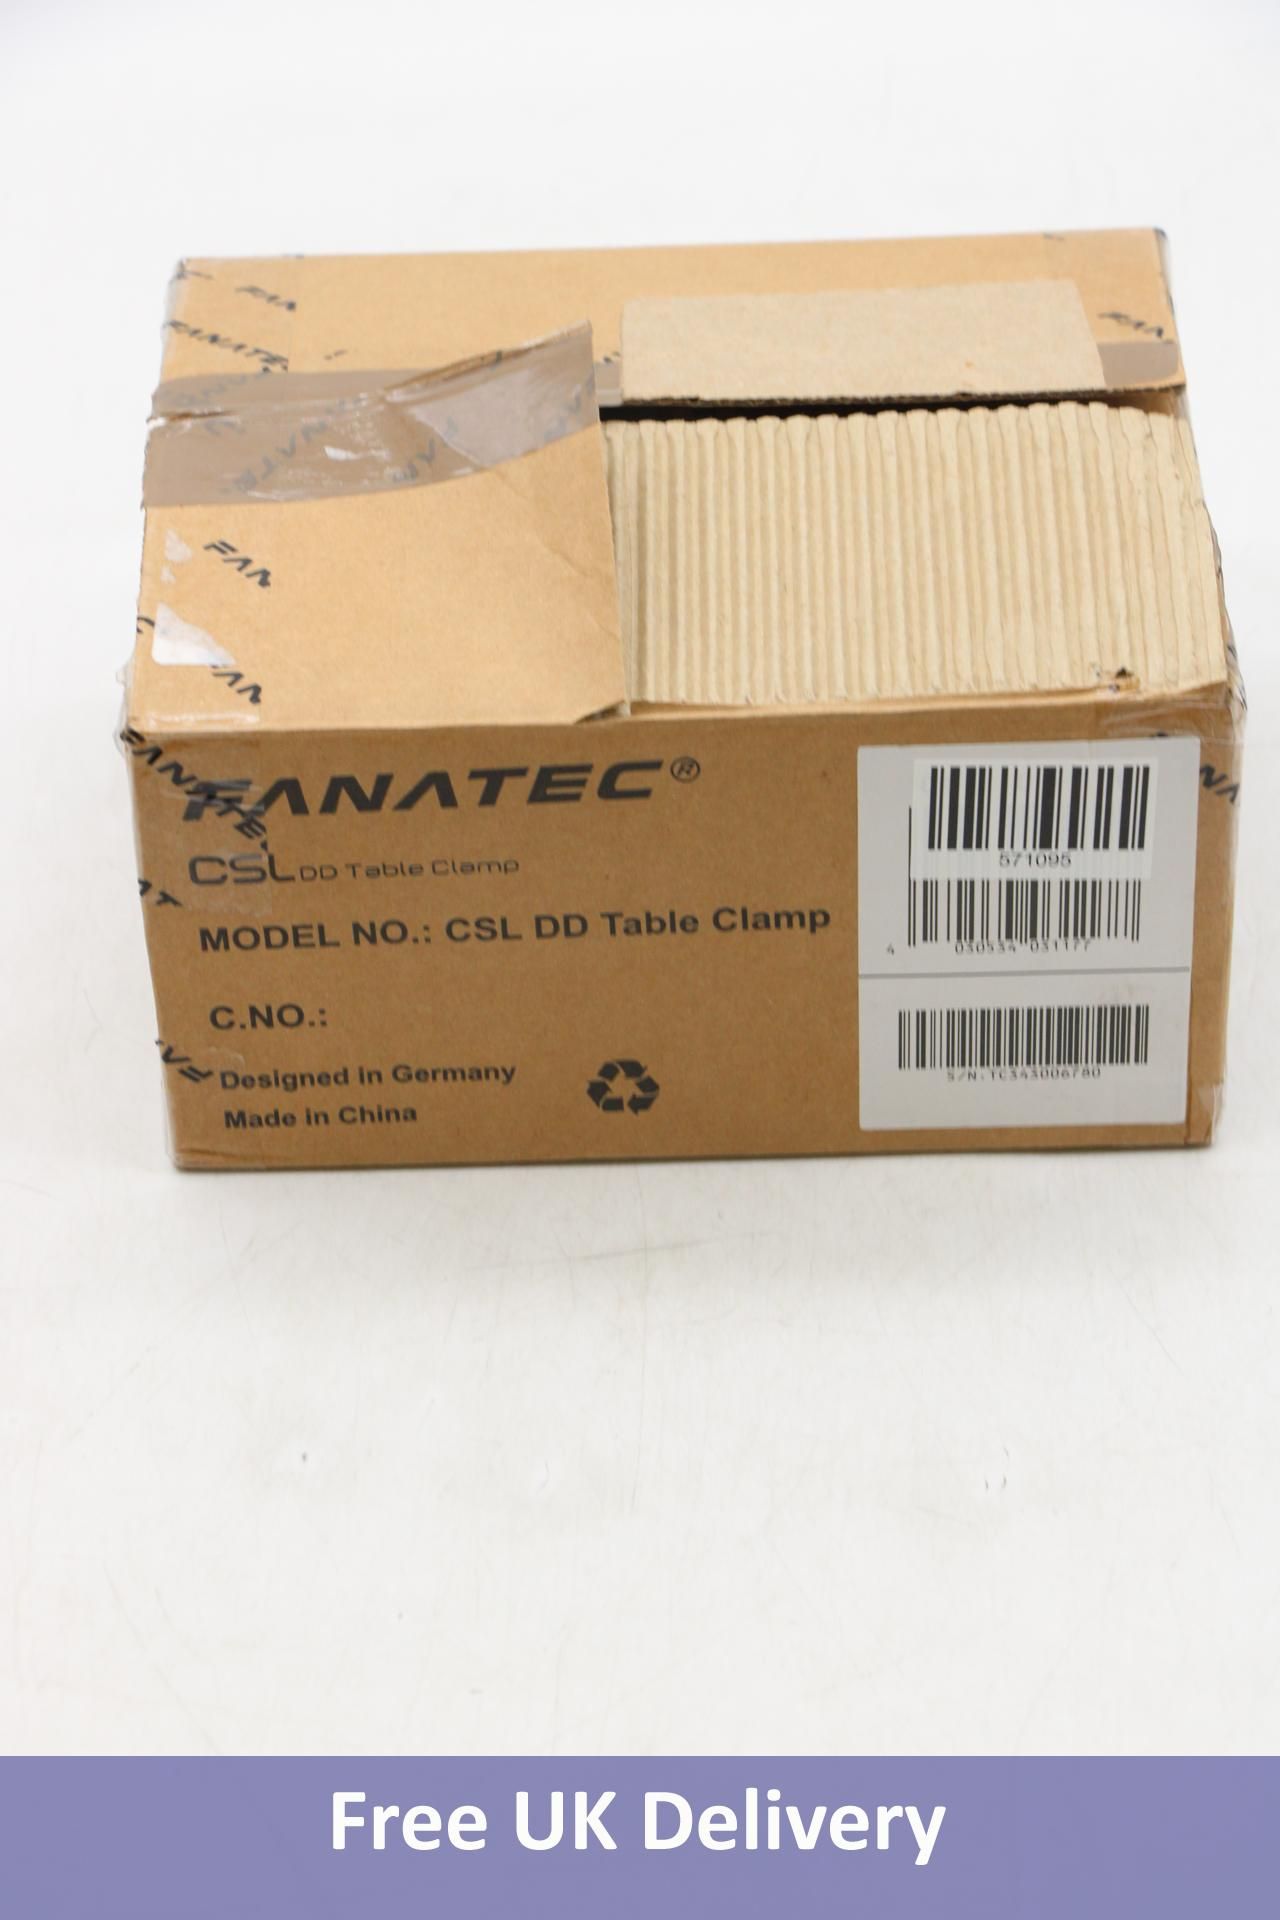 Fanatec CSL DD, PSU90, EU and 1x Fanatec CSL DD Table Clamp. Clamp box damaged - Image 2 of 2